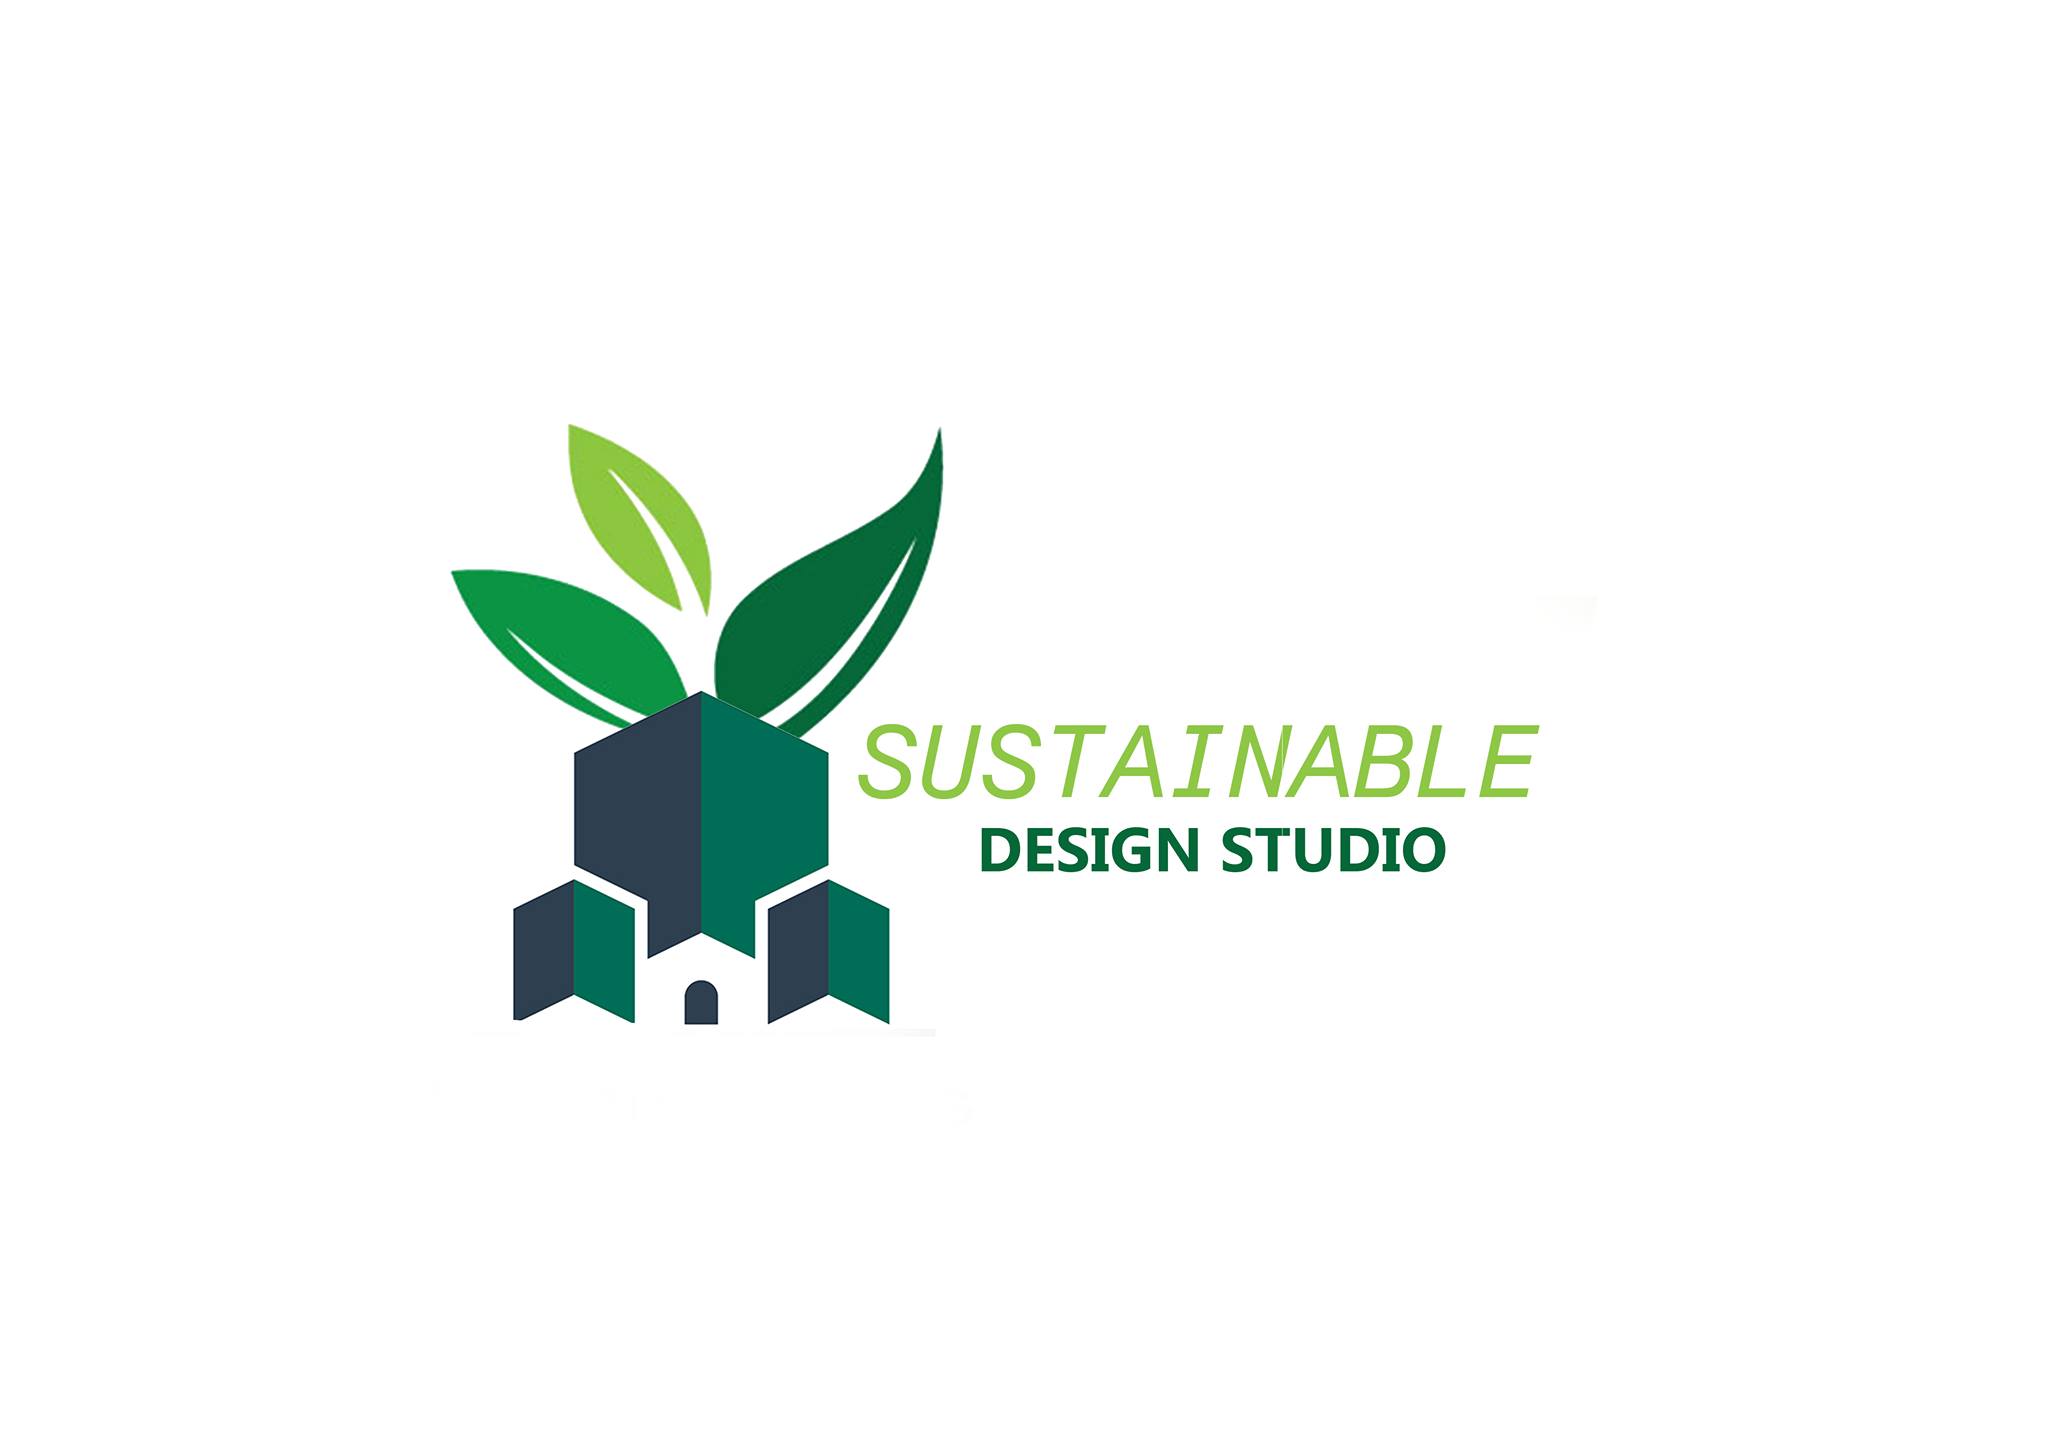 Sustainable design studio|Legal Services|Professional Services